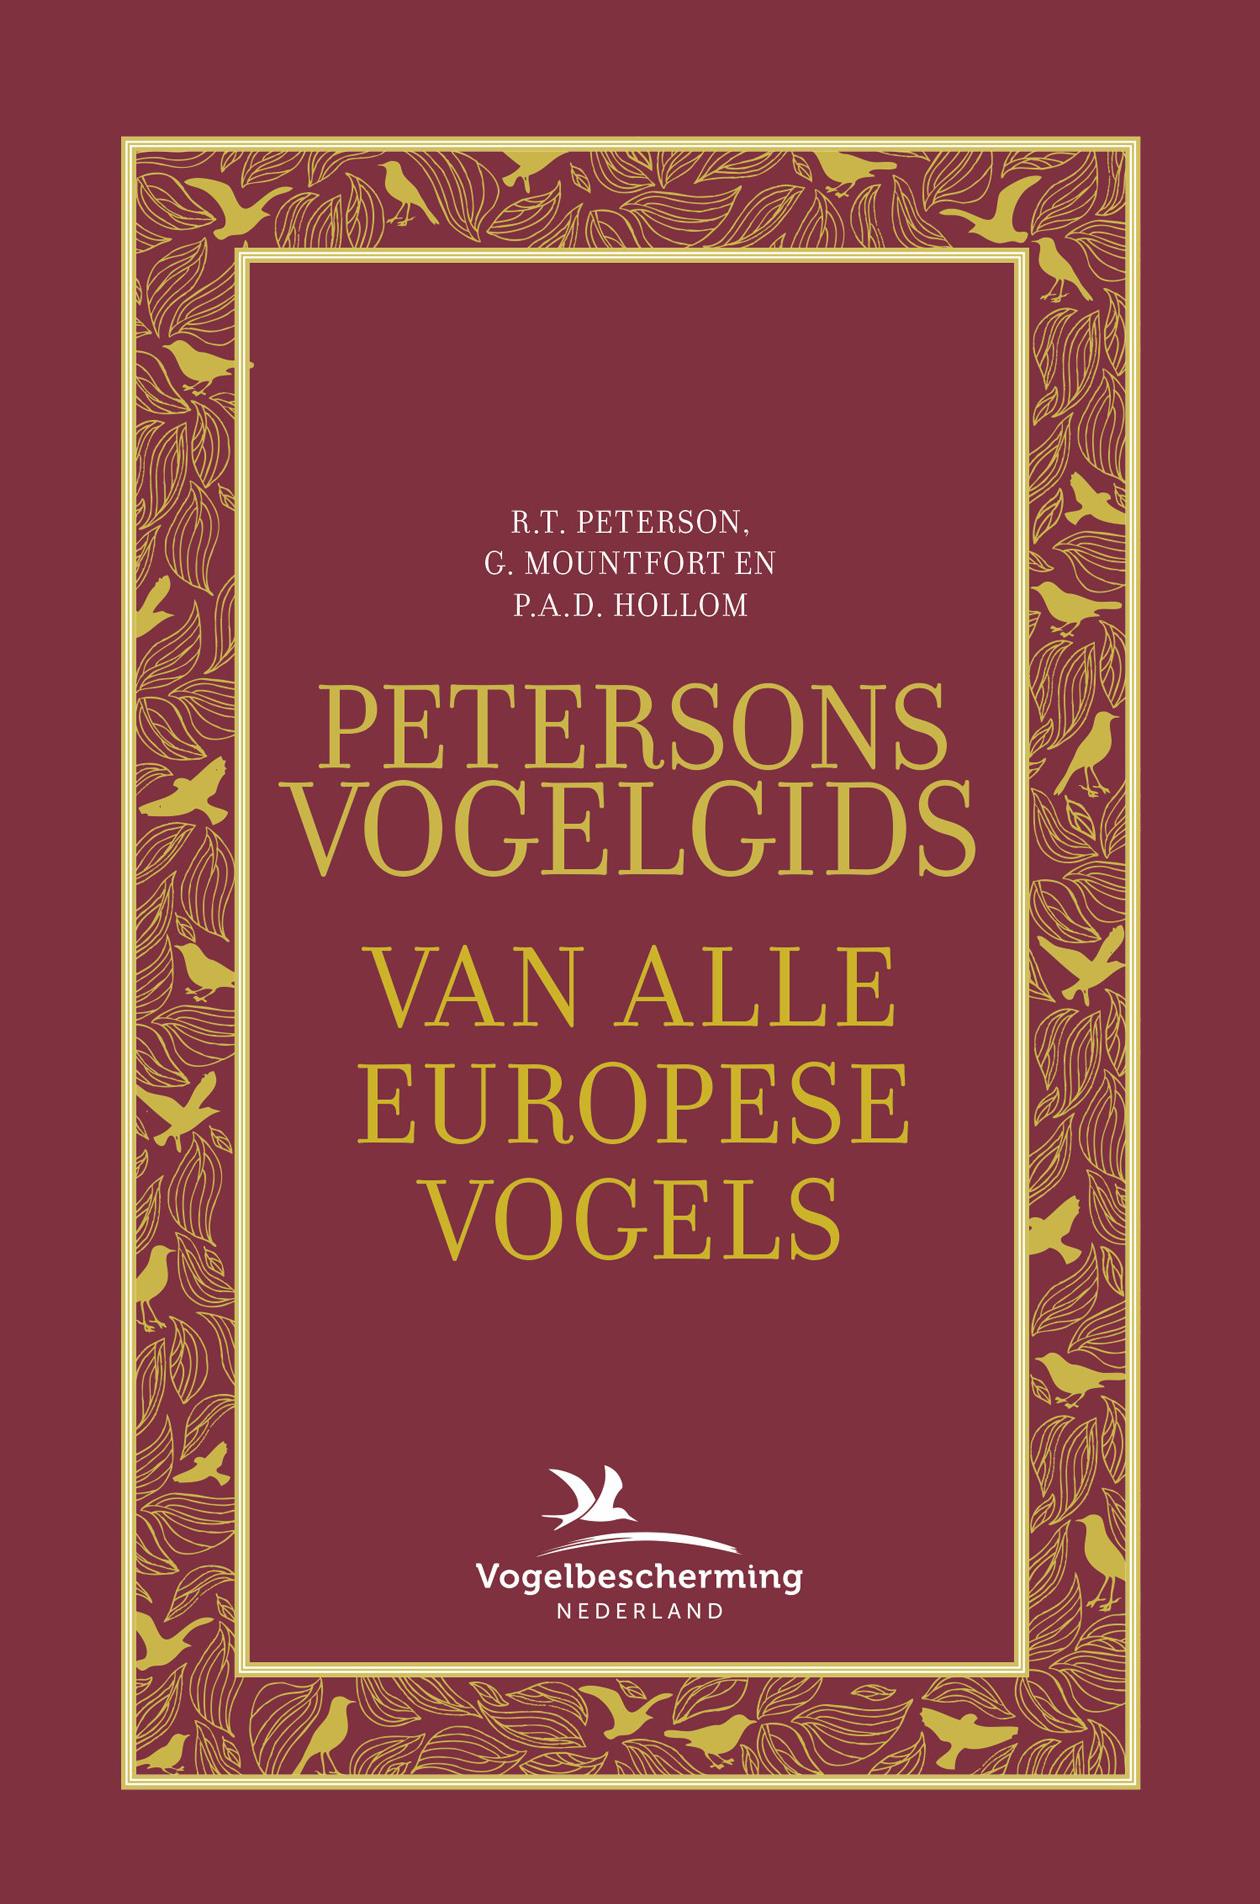 Afbeelding Petersons vogelgids van alle Europese vogels